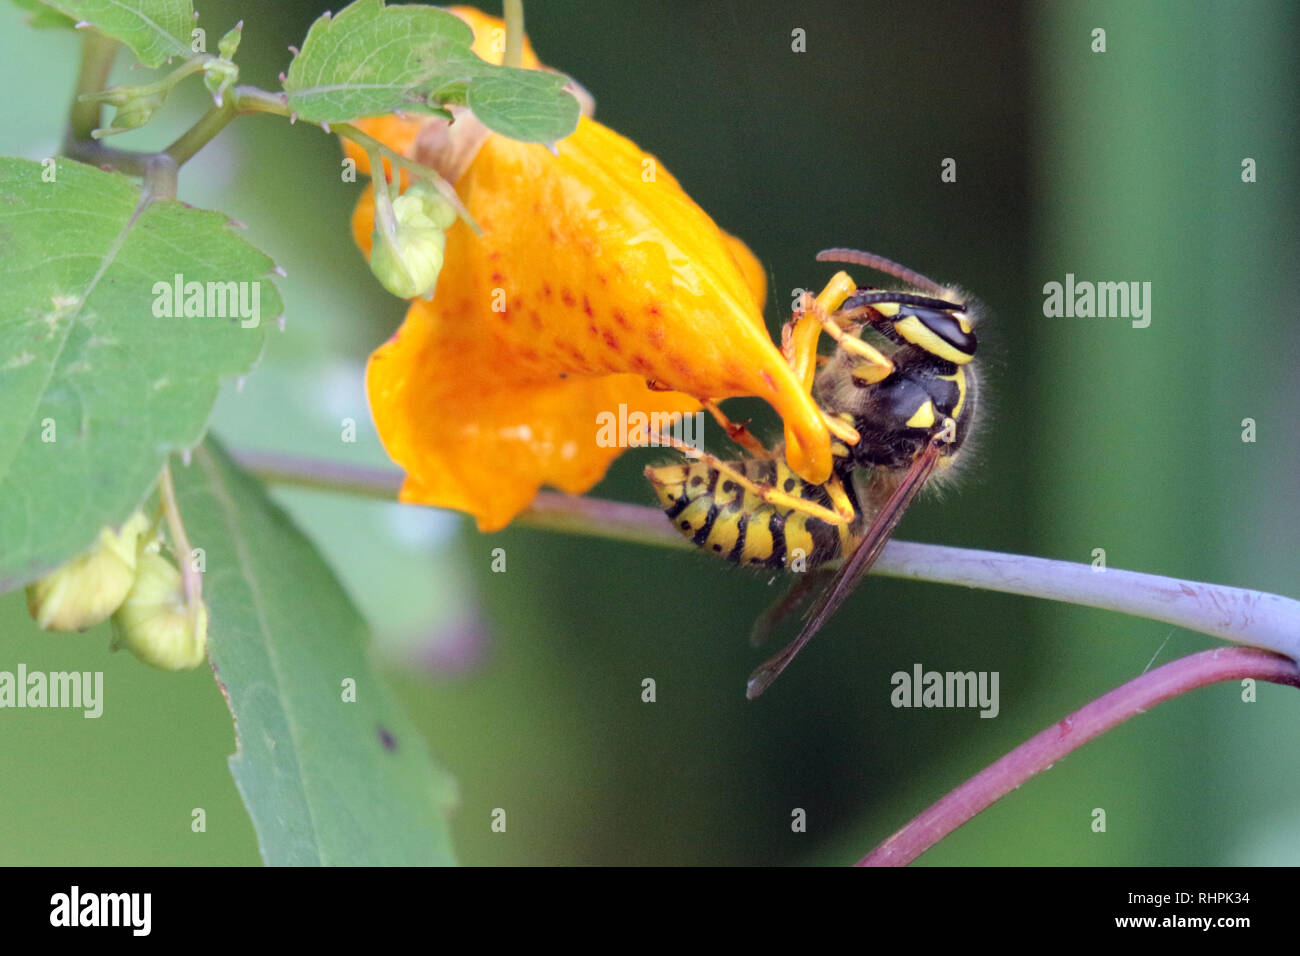 German Yellowjacket wasp on orange marsh flower Stock Photo